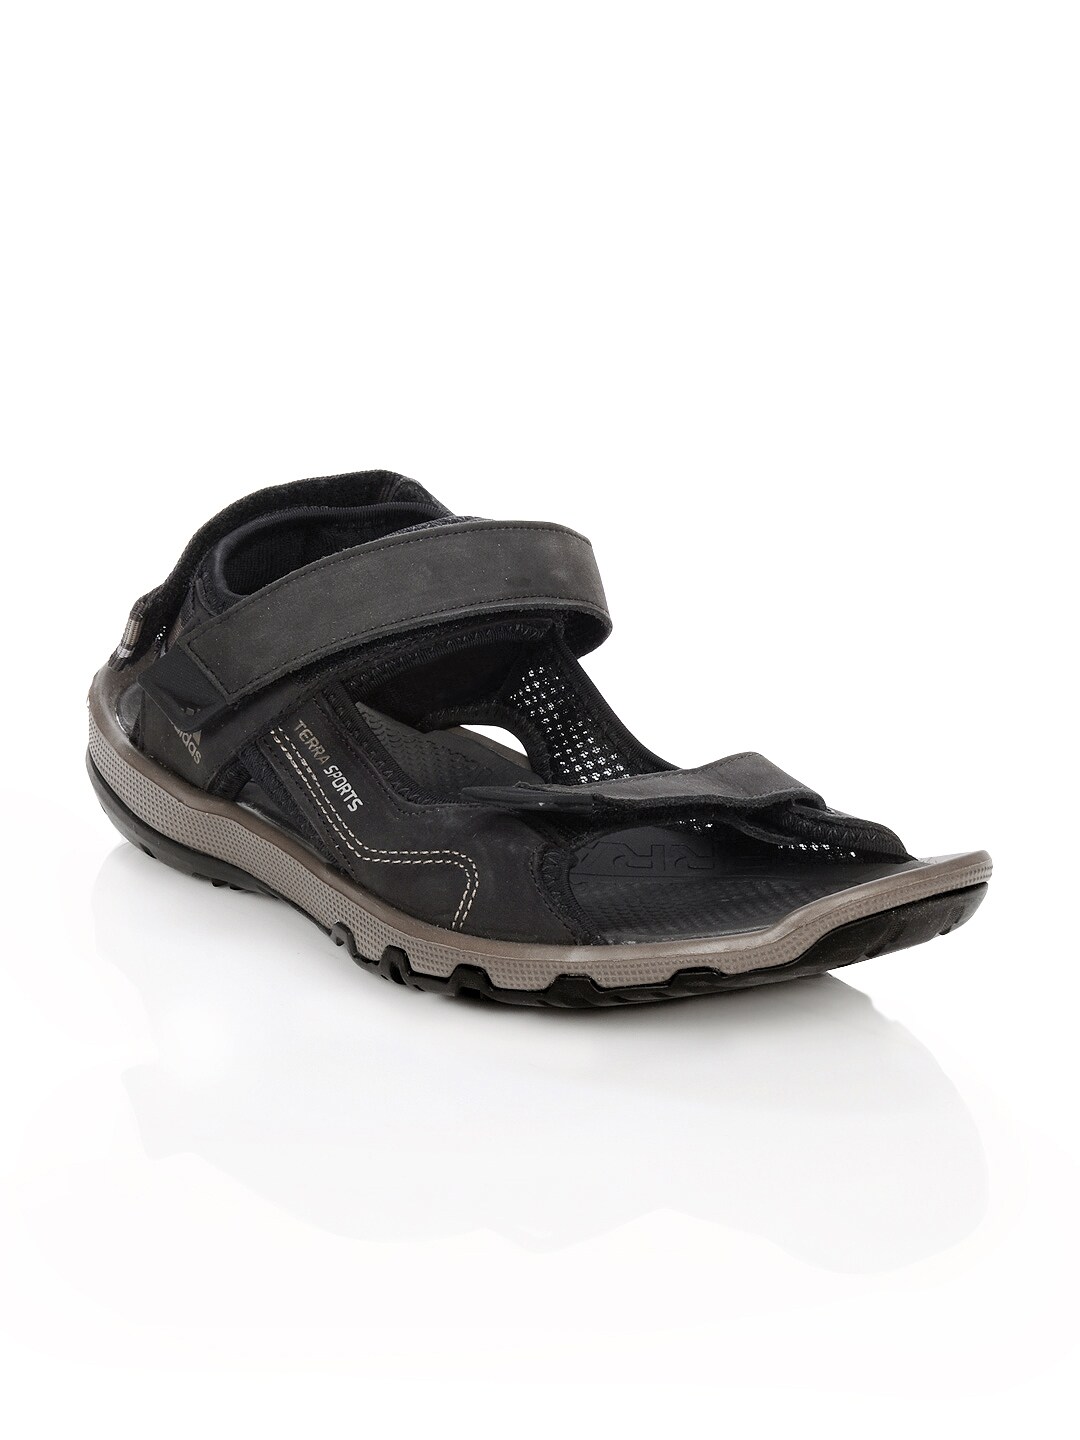 ADIDAS Men Terra Sports Lea II Black Sandals